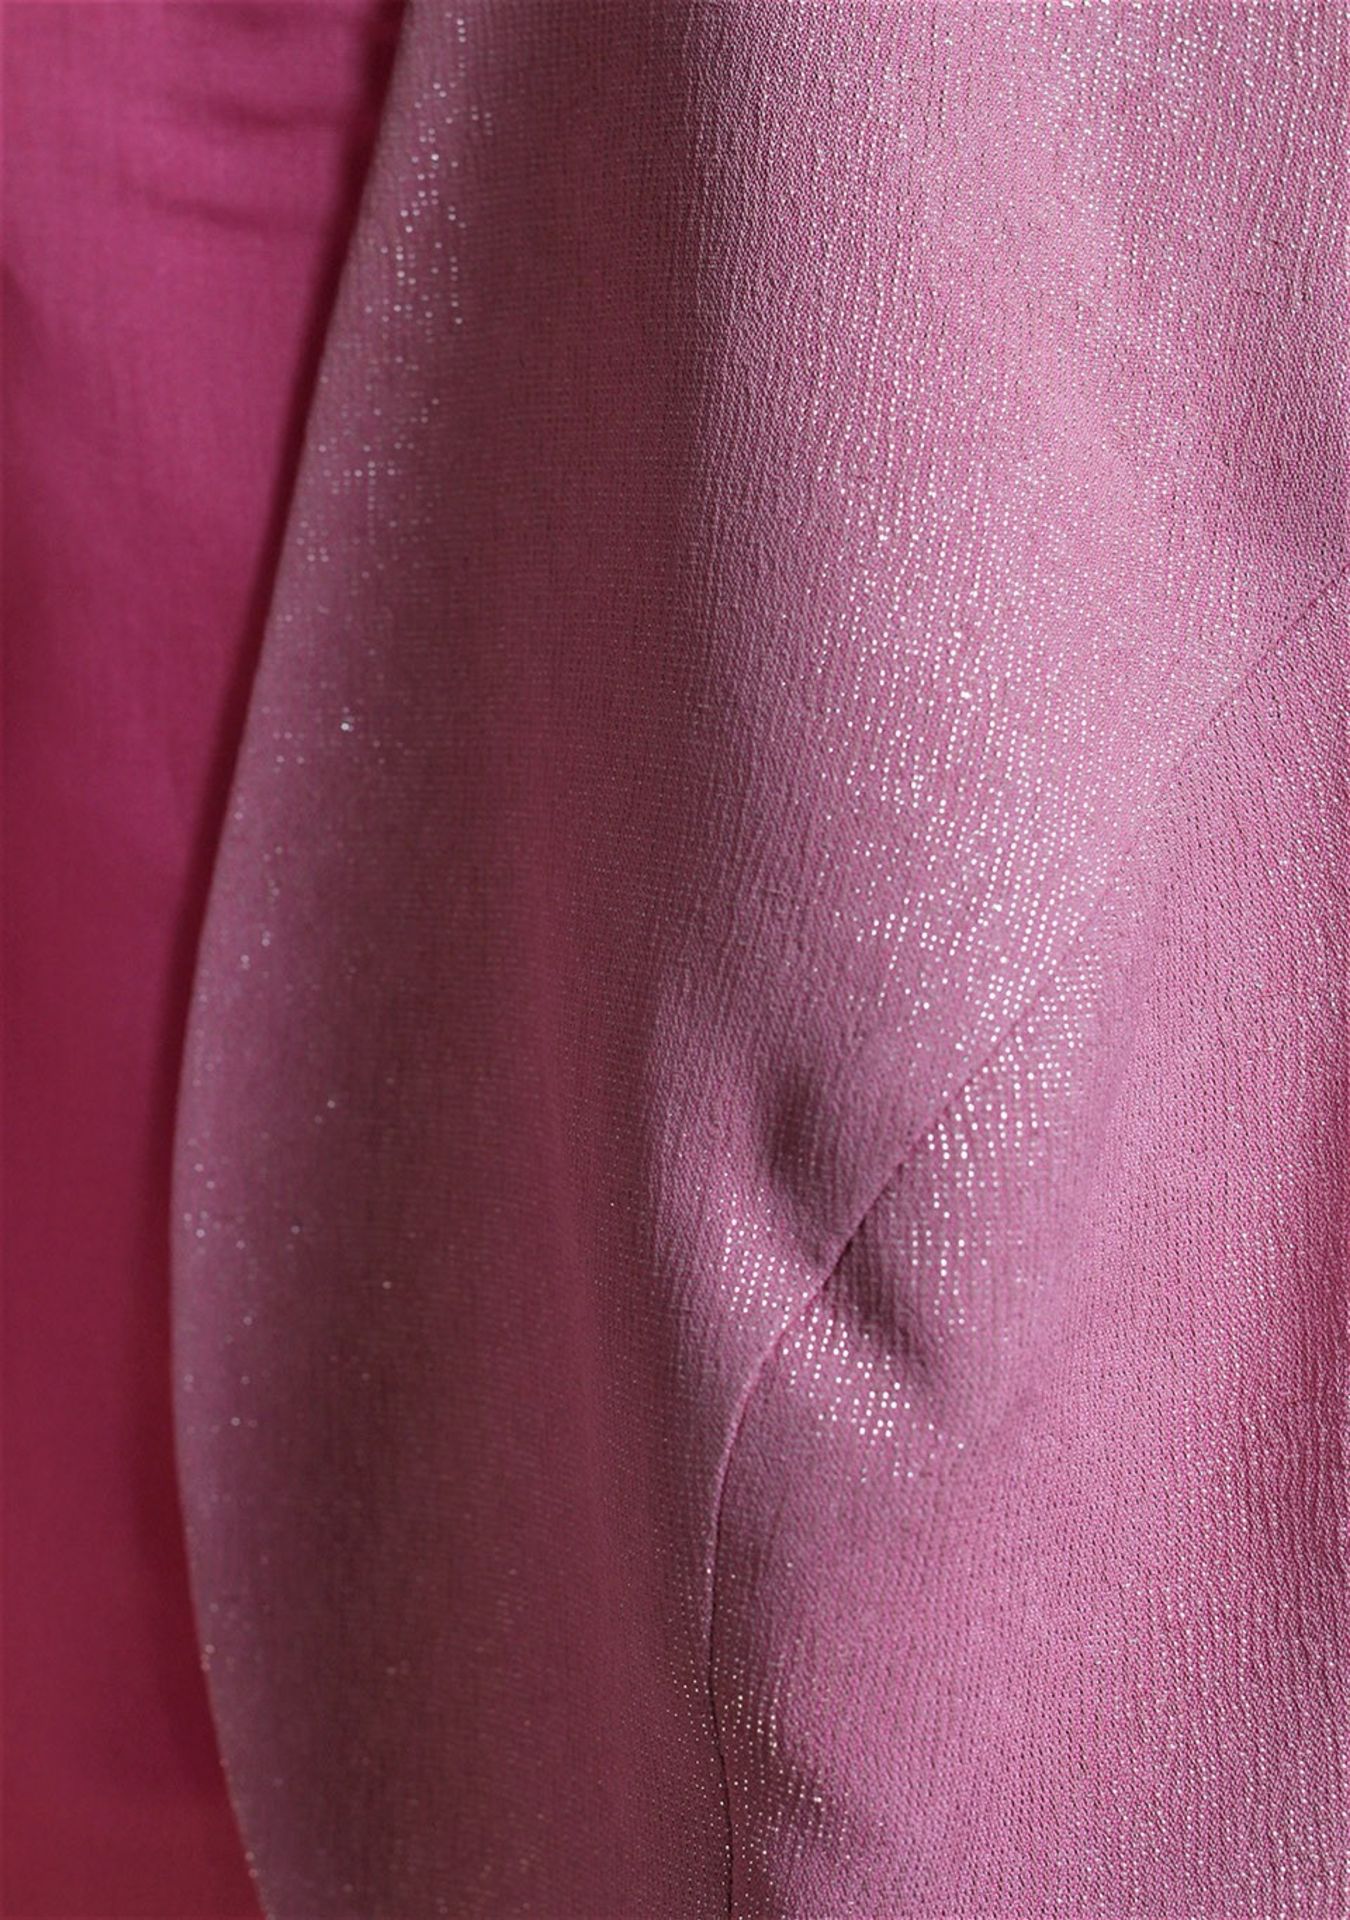 1 x Boutique Le Duc Pink Waistcoat - Size: L - Material: 49% Cotton, 40% Acetate, 11% Poly metal - Image 2 of 7